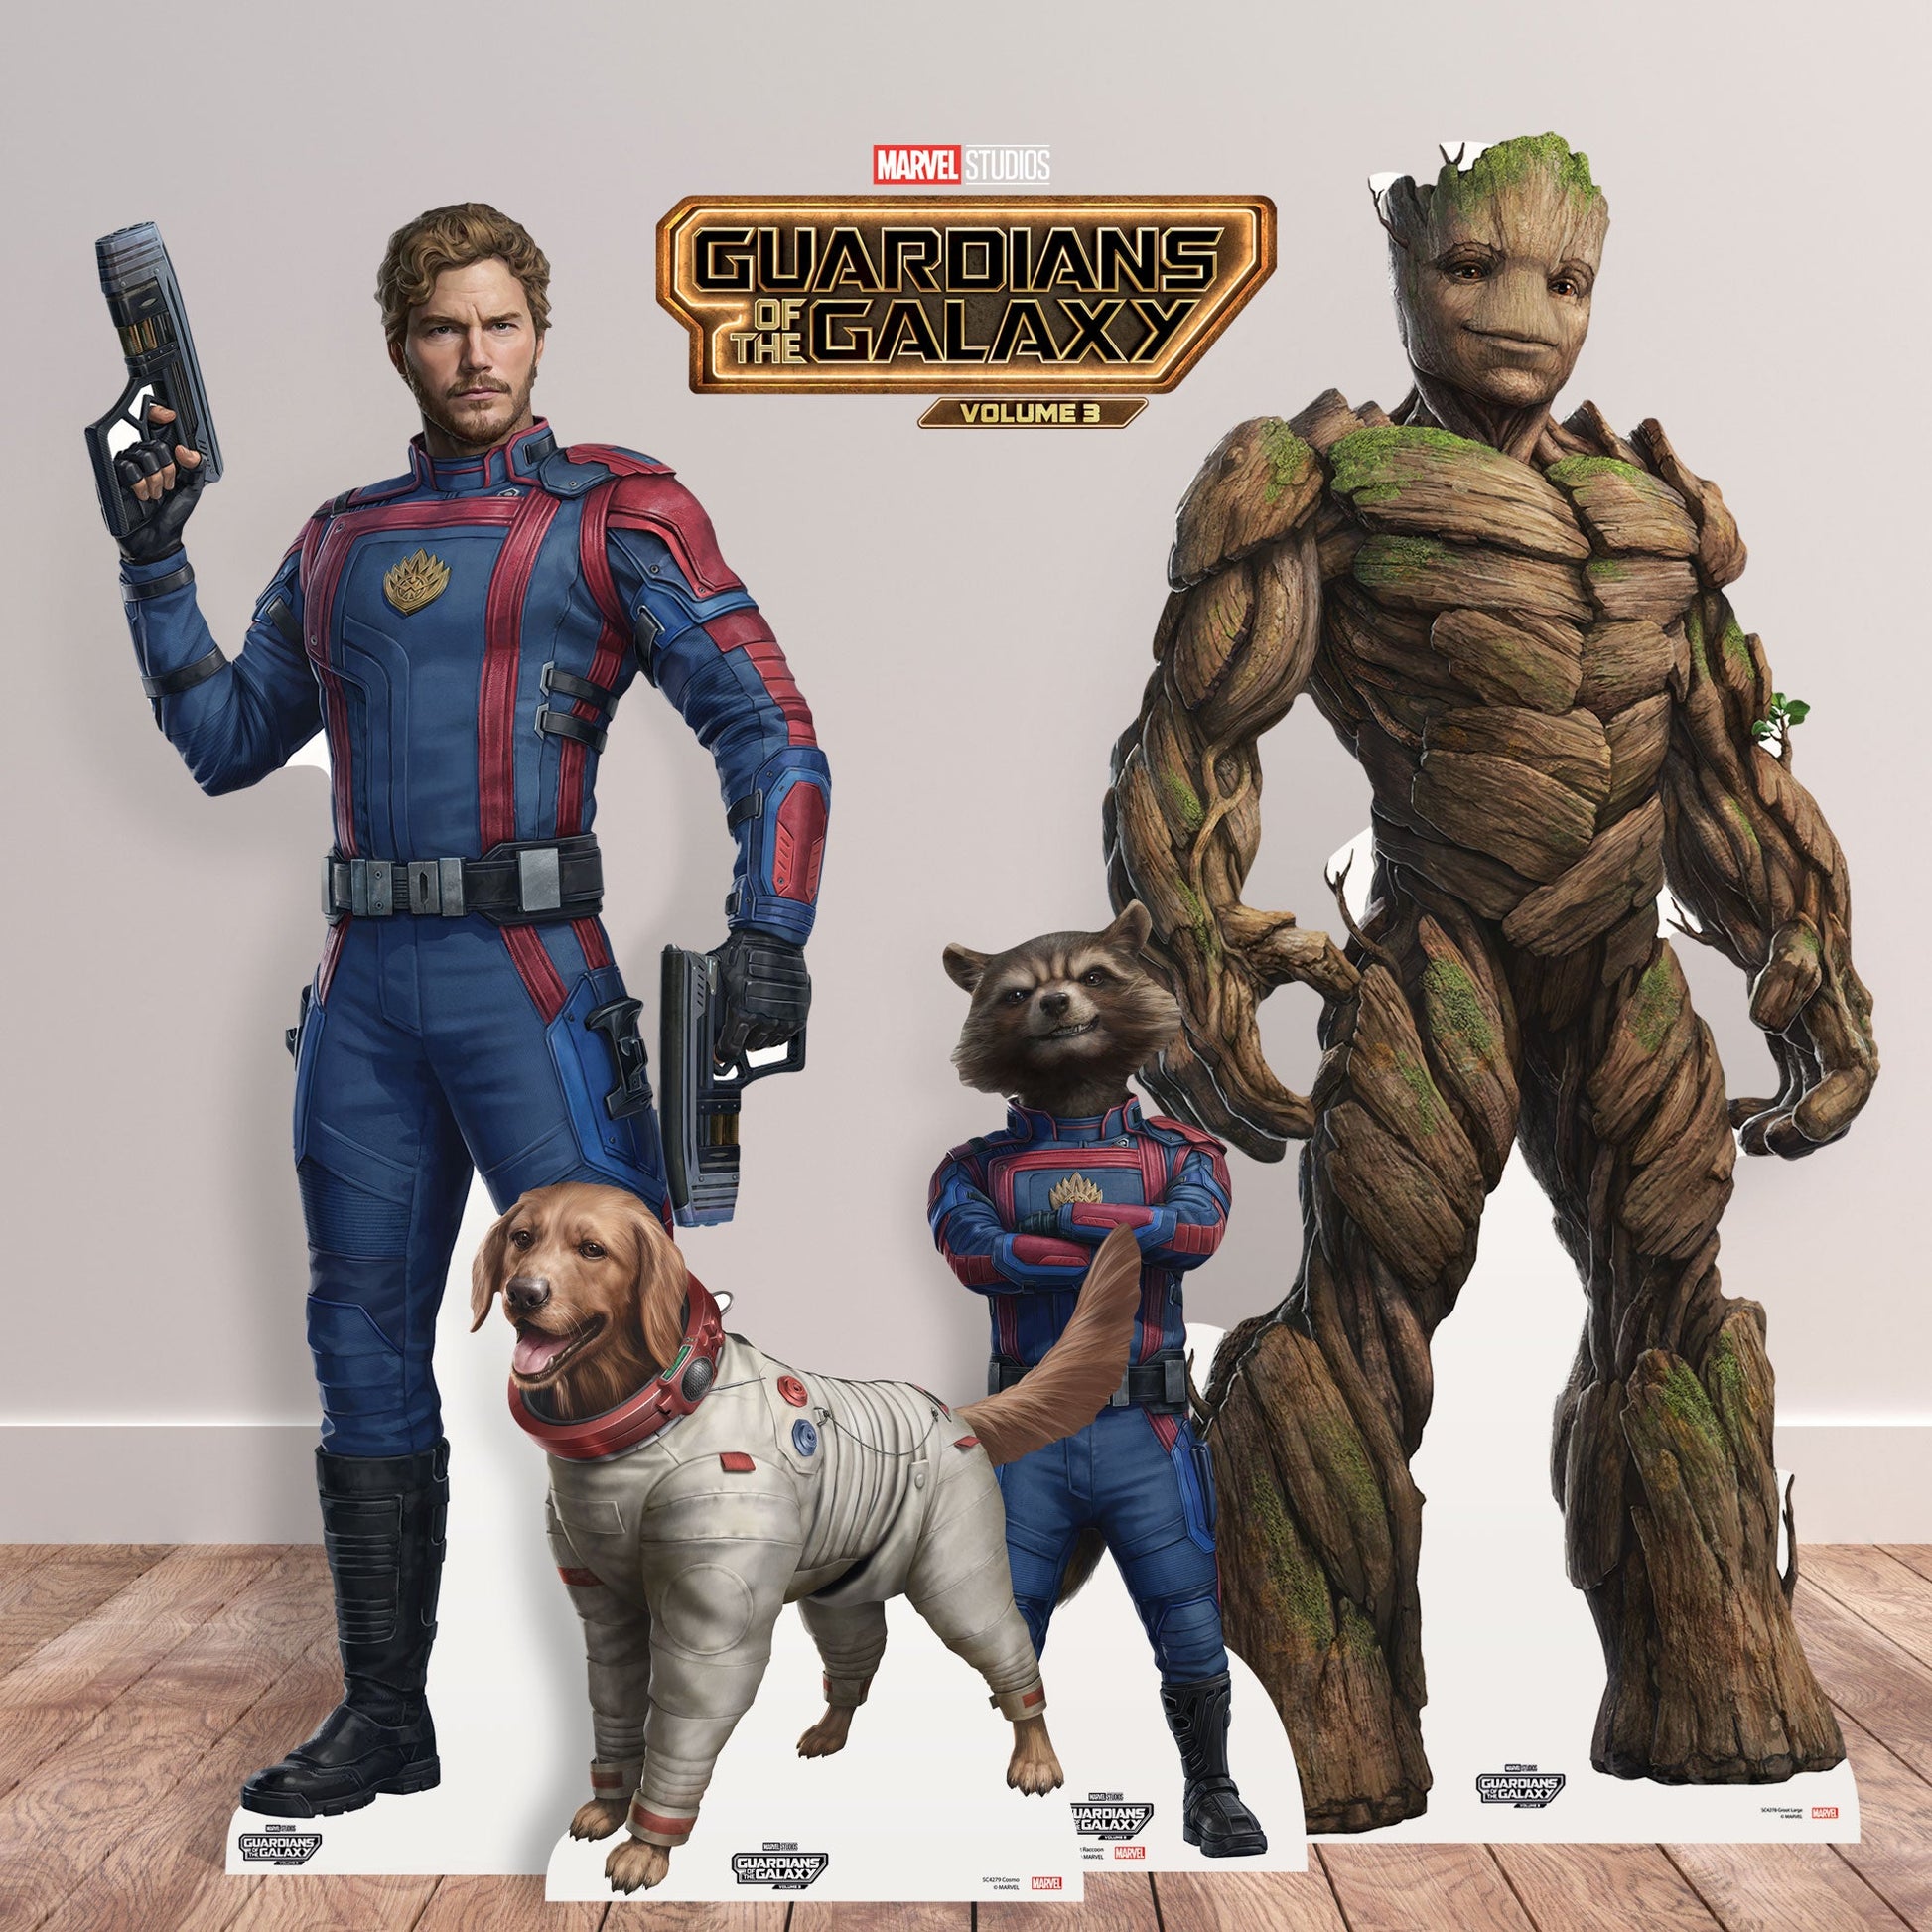 SC4281 Star Lord Chris Pratt Guardians of the Galaxy Three Marvel Lifesize Cardboard Cut Out With Mini Cardboard Cutout